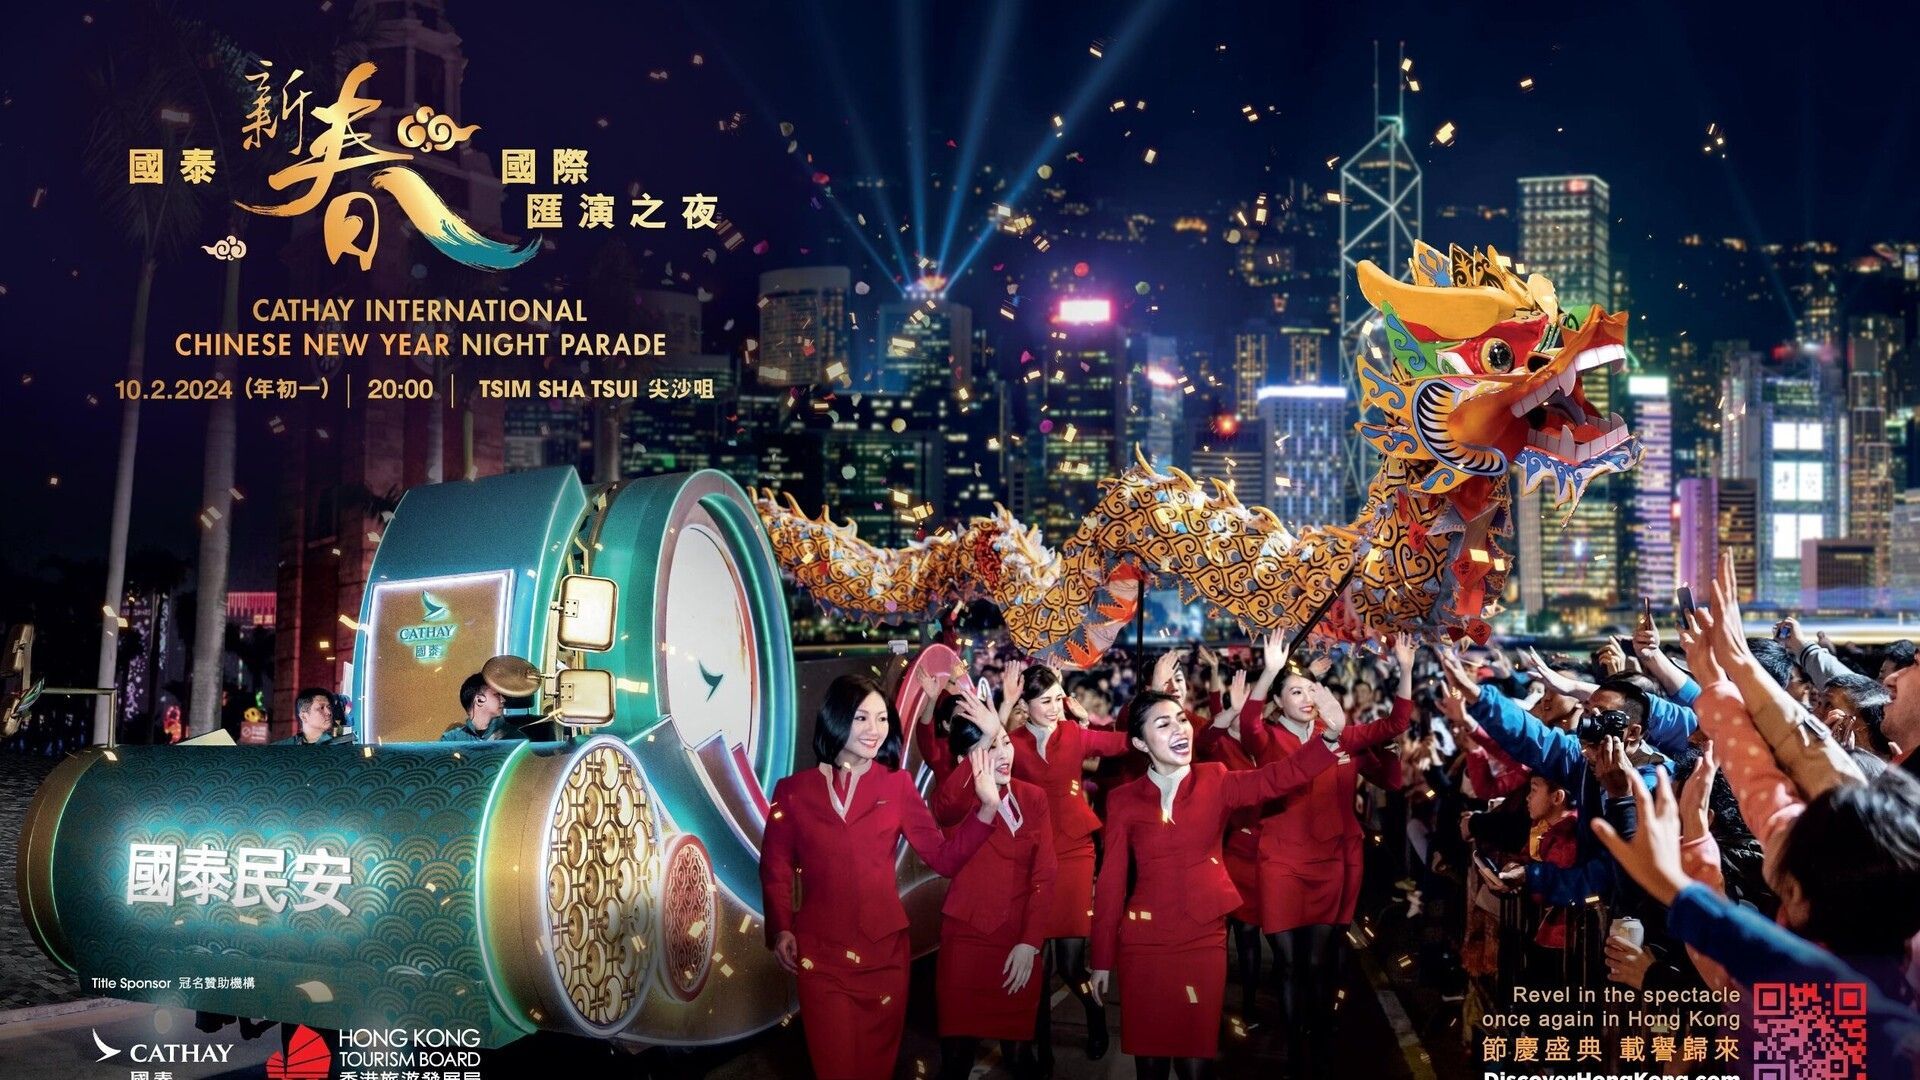 Hong Kong's Chinese New Year Night Parade will return after 5 years